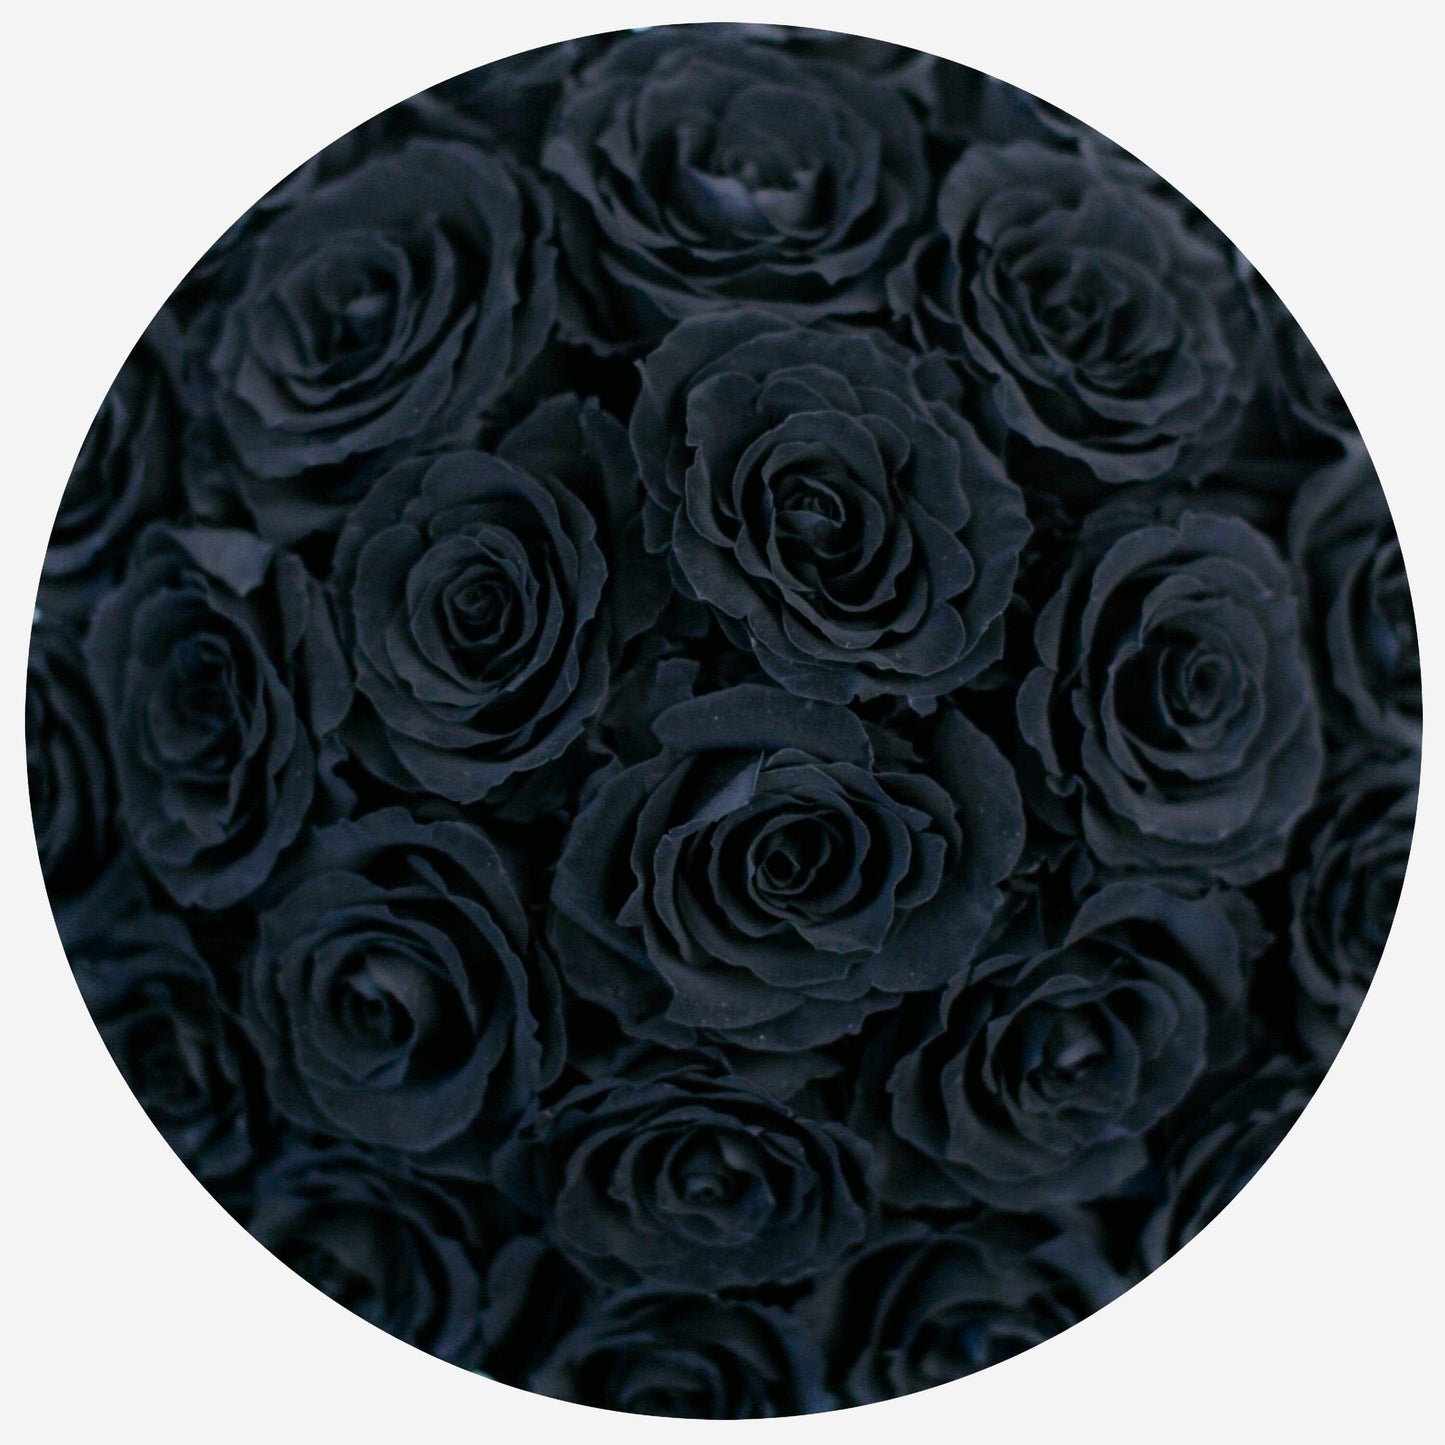 Basic Light Pink Suede Box | Black Roses - The Million Roses